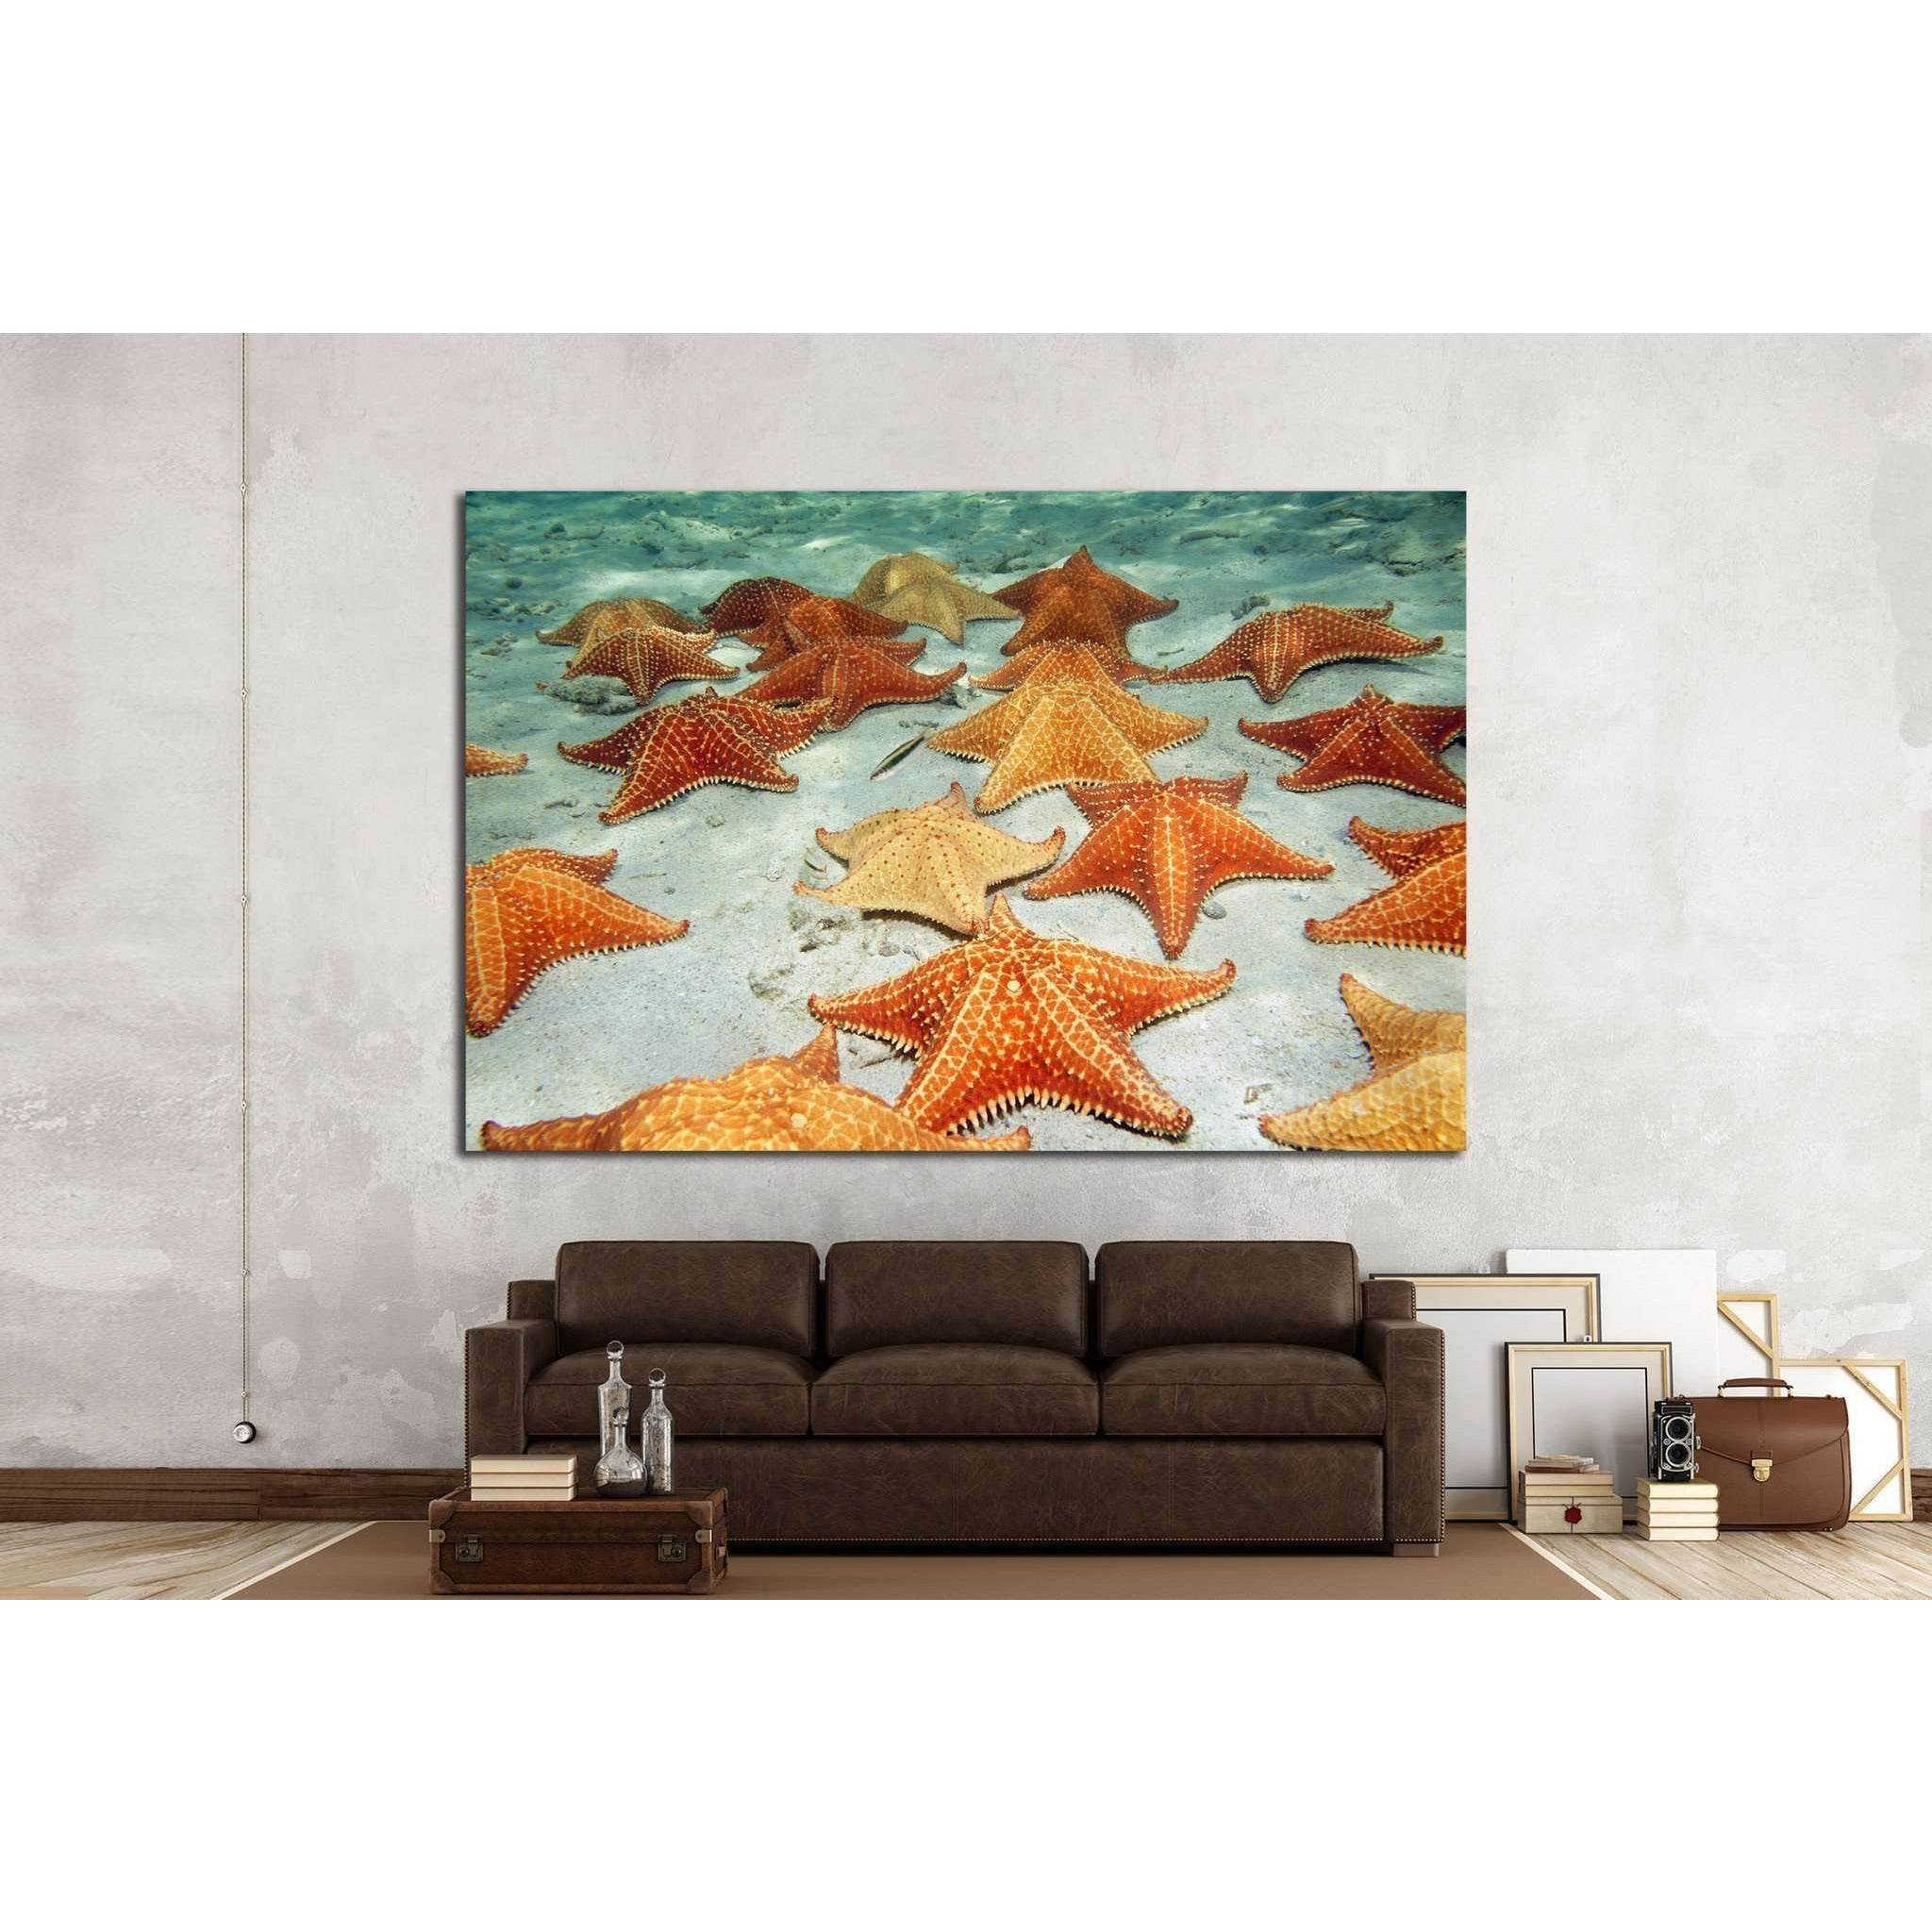 Plenty of cushion starfish on a sandy ocean floor №1395 Ready to Hang Canvas Print